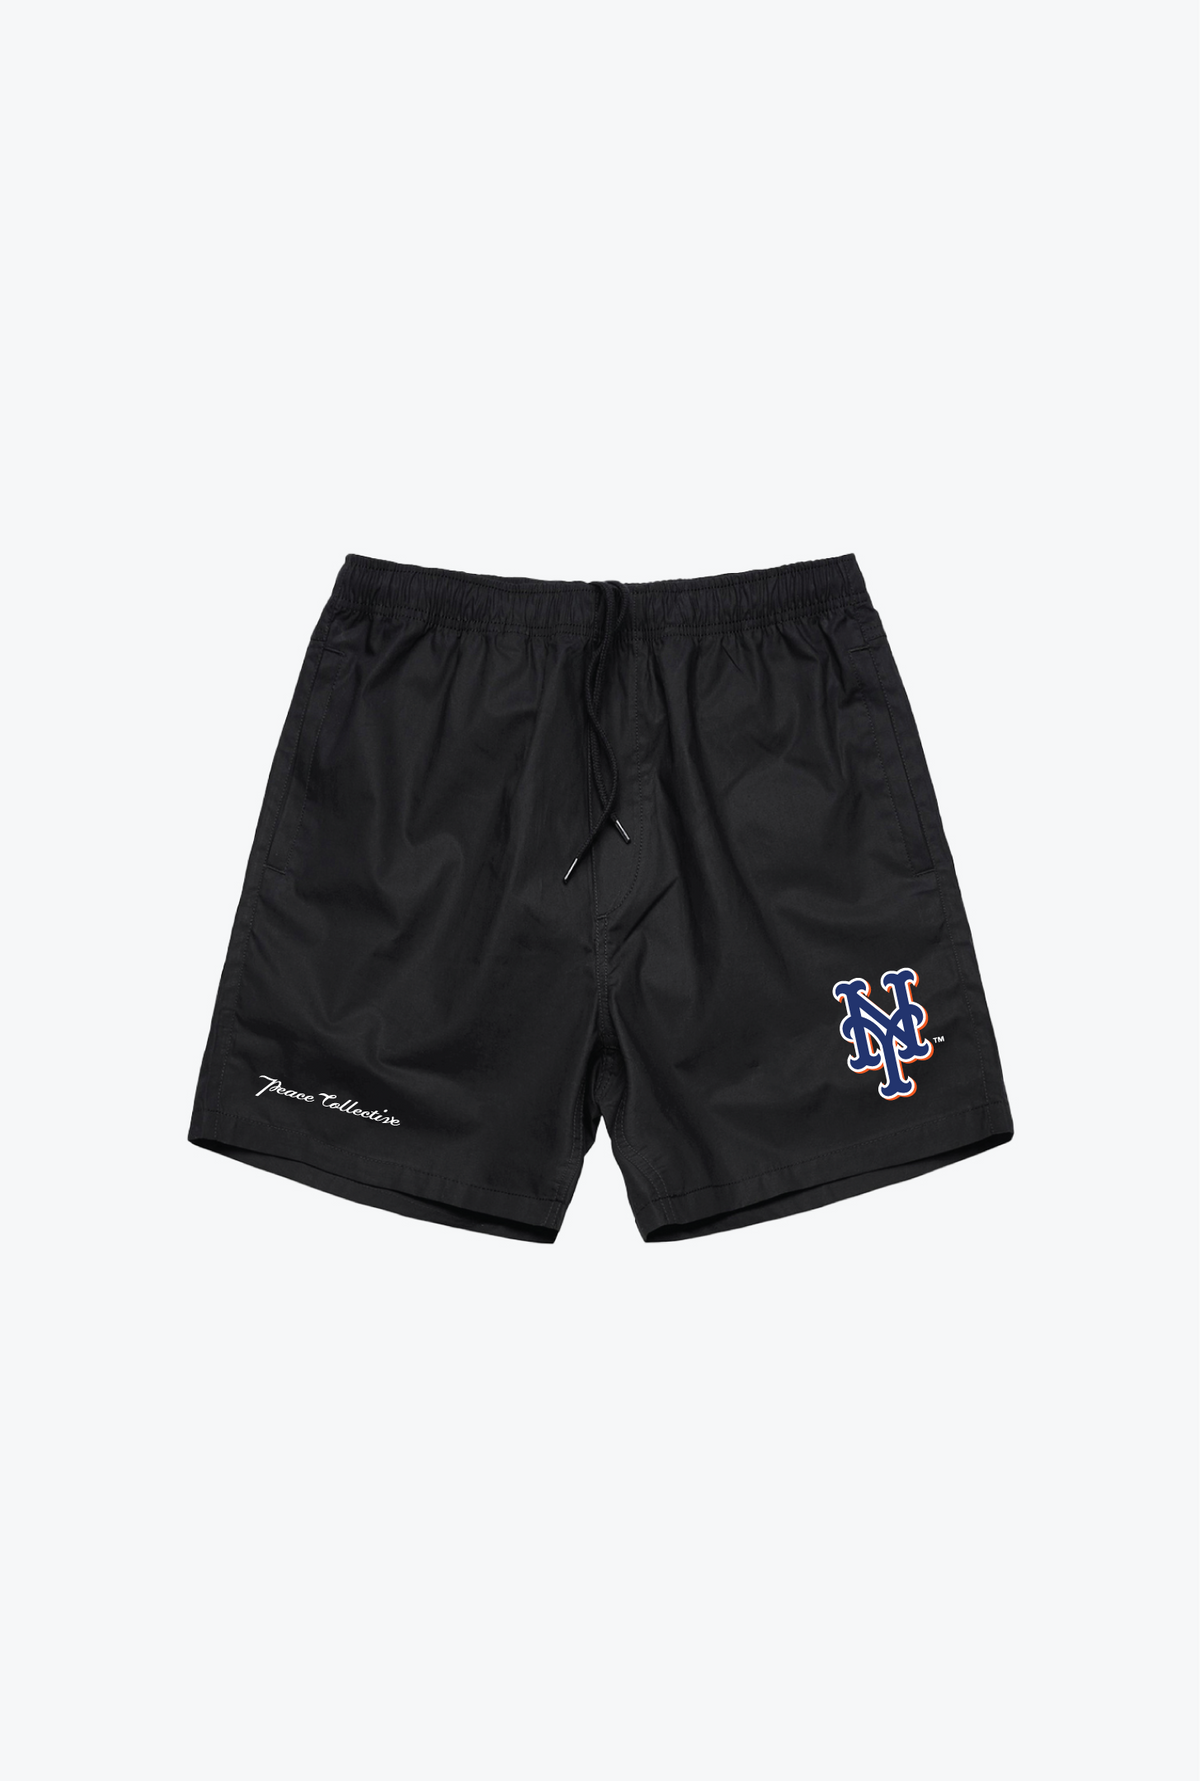 New York Mets Board Shorts - Black